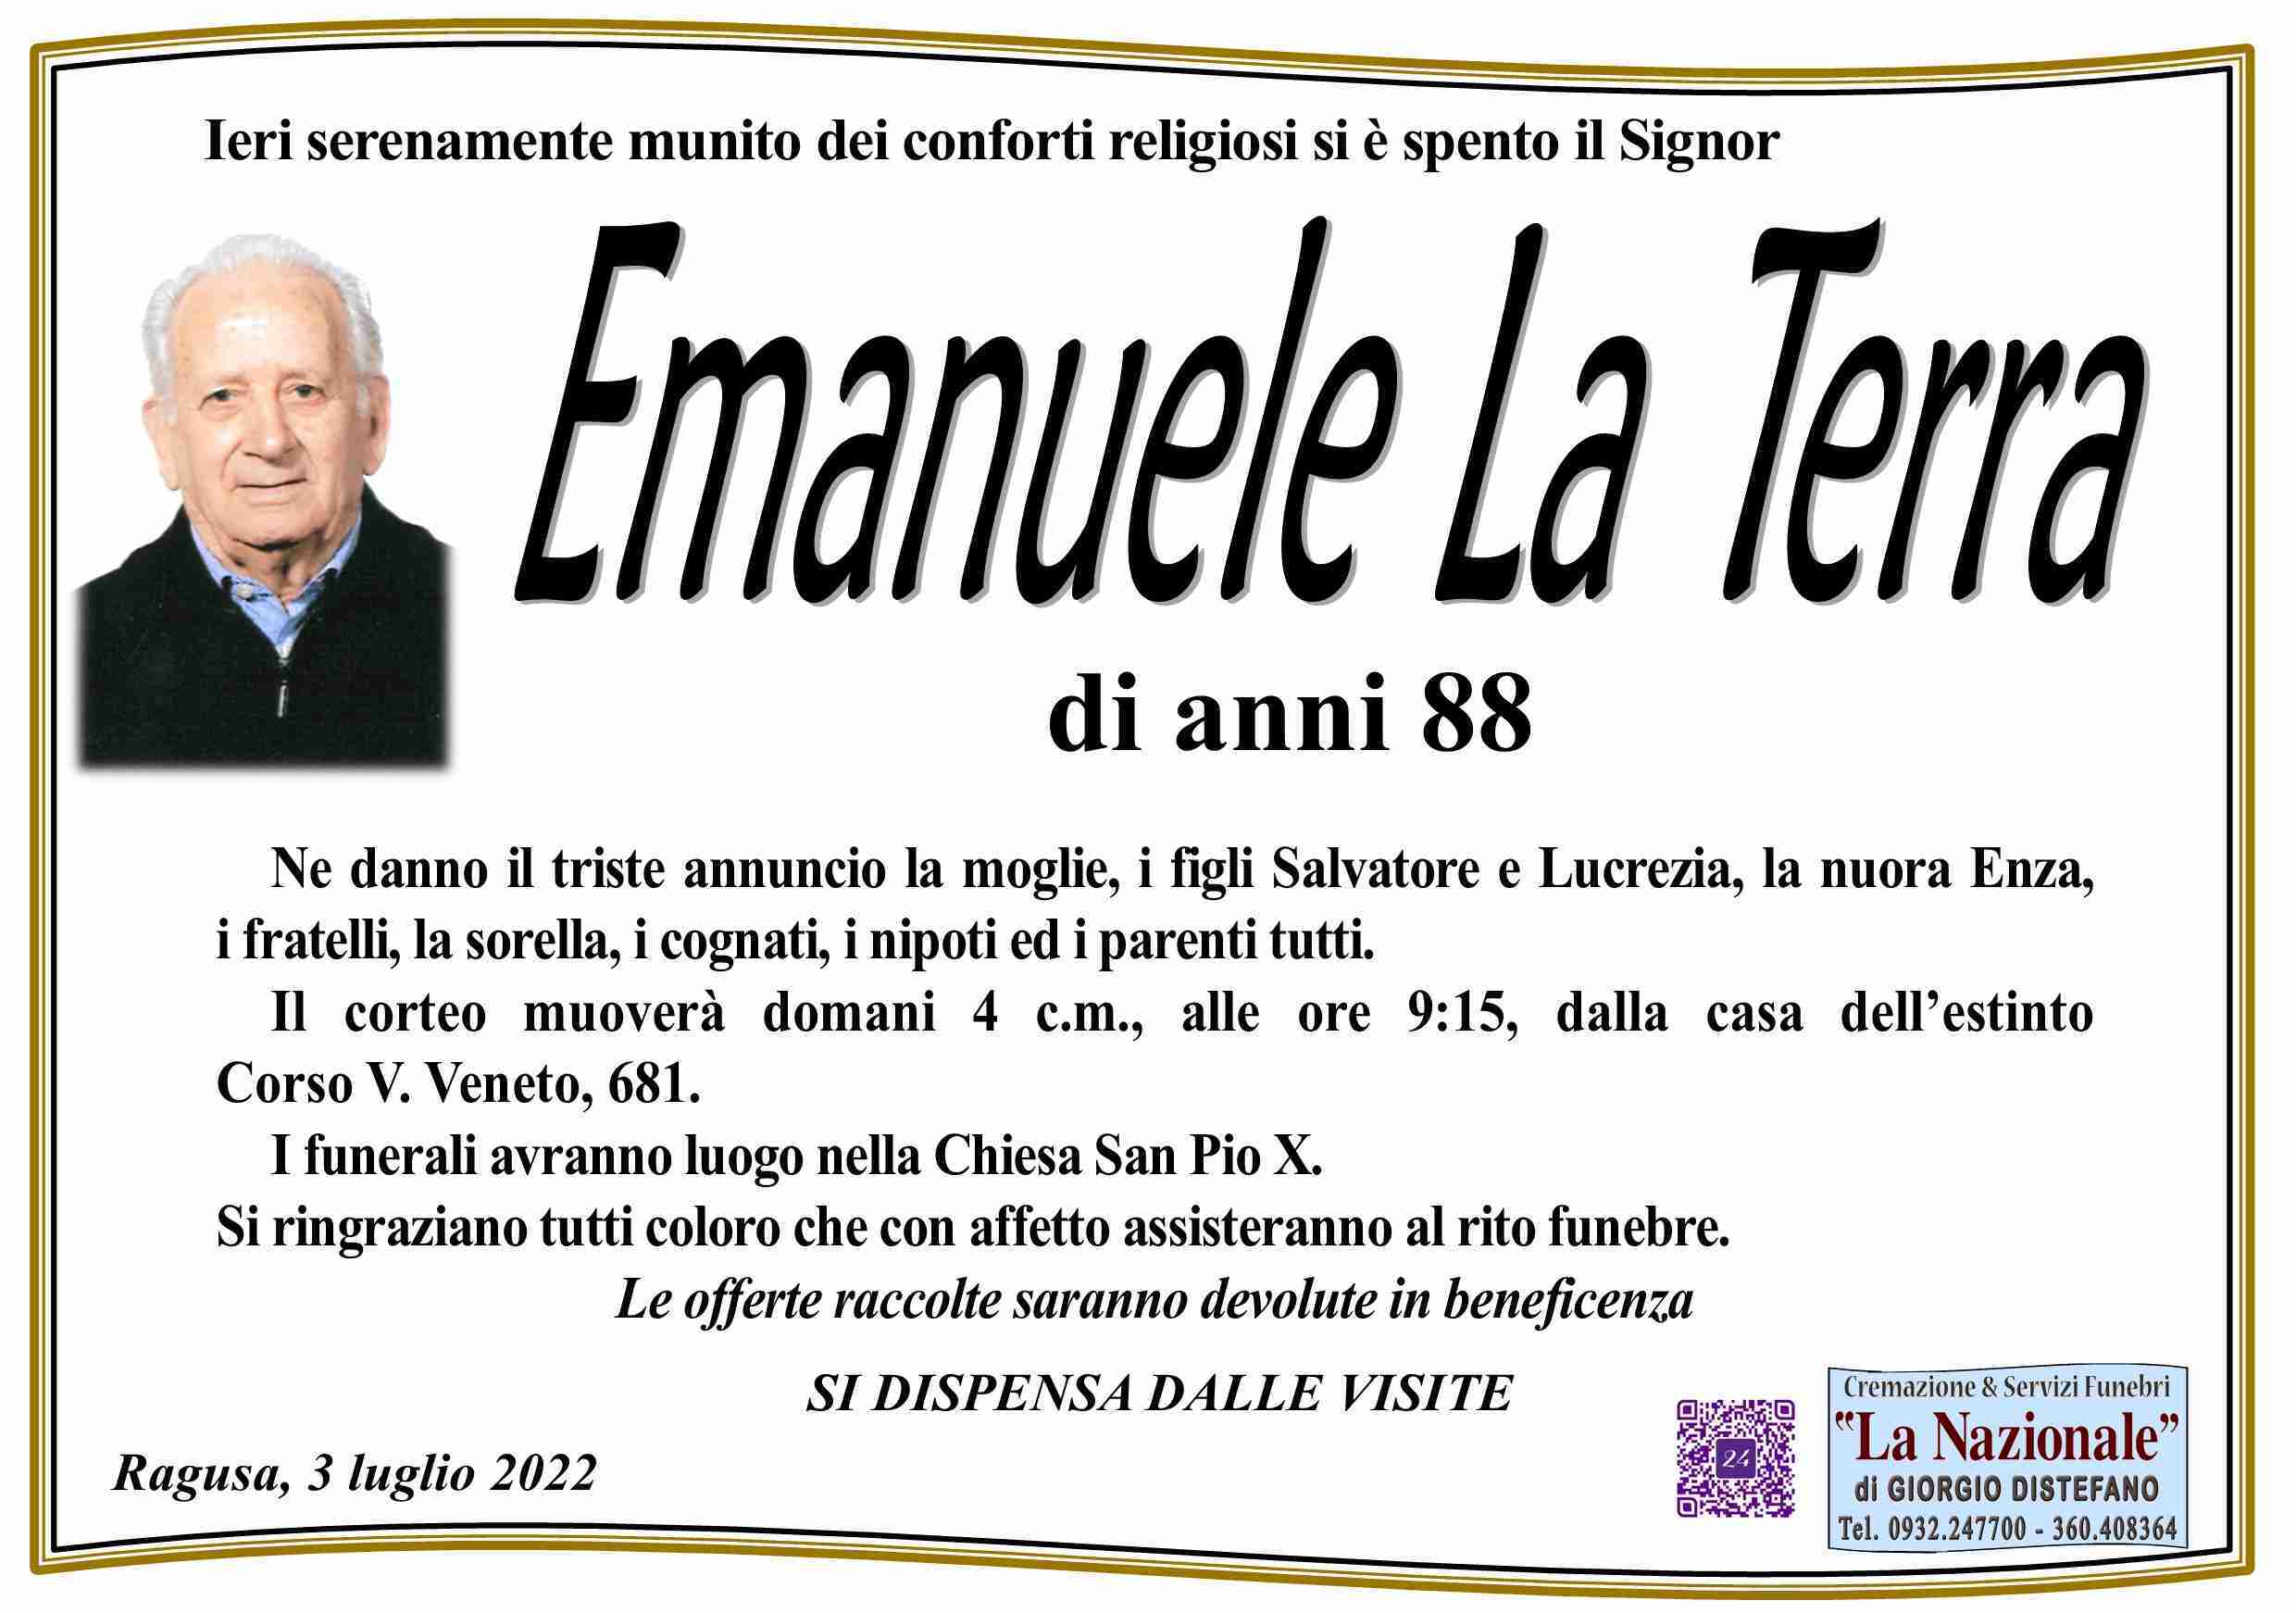 Emanuele La Terra